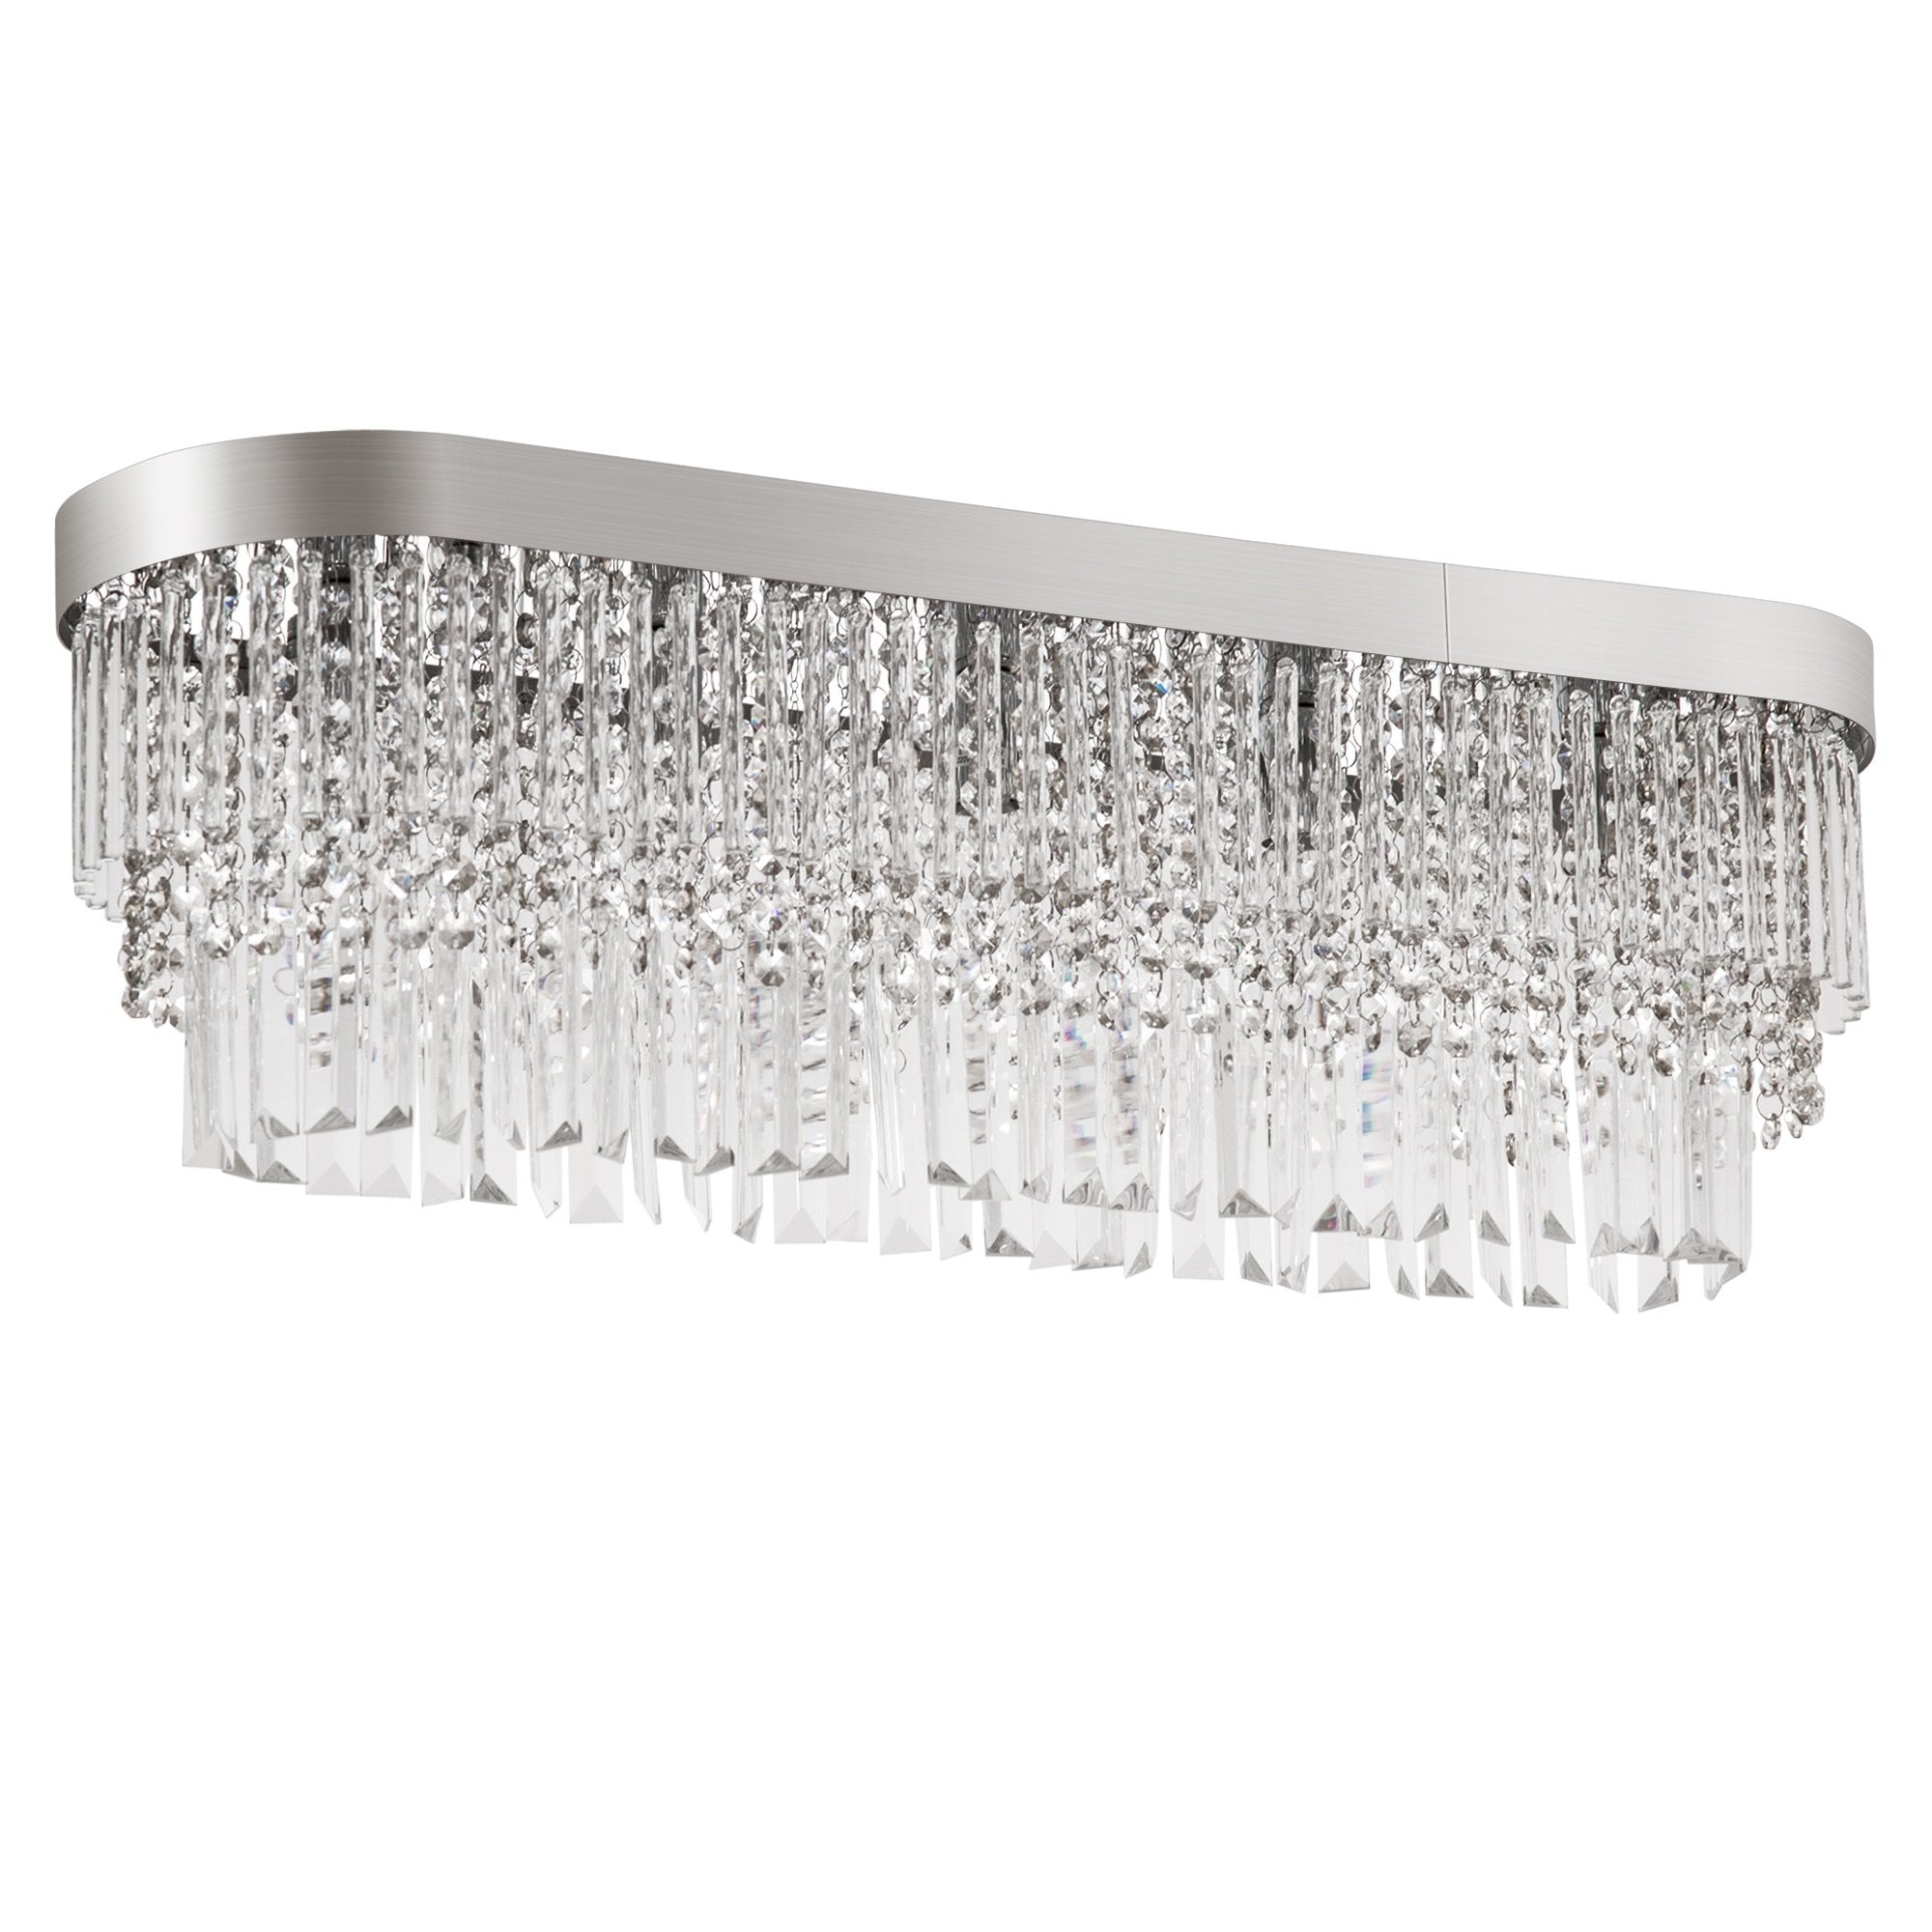 HOMCOM Modern Raindrop Crystal Chandelier - Round Rectangular Pendant Ceiling Light - Linear Hanging Lighting with Stainless Steel Base - for Restaura